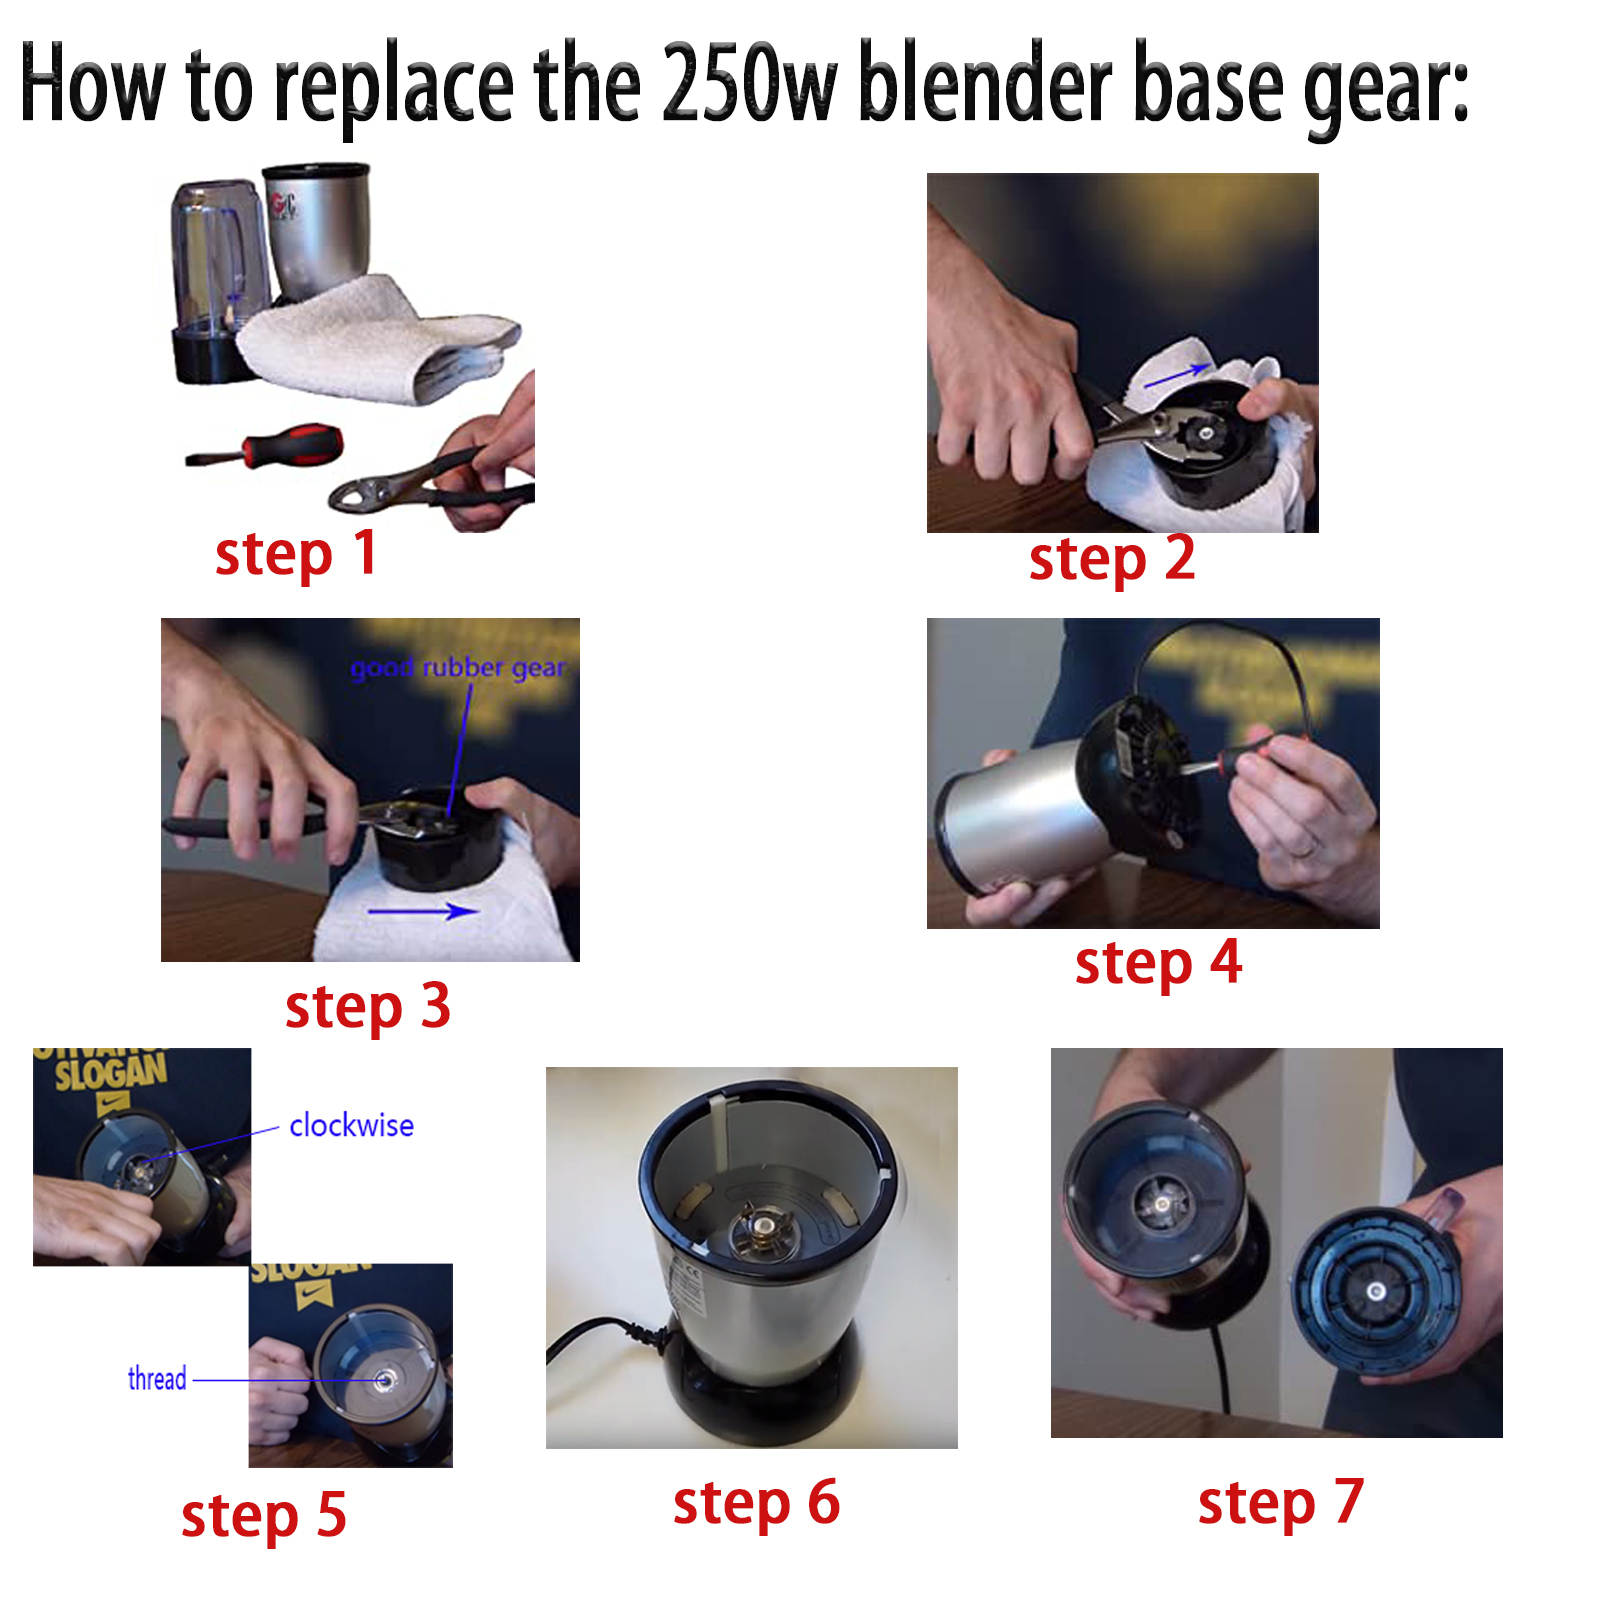 Magic Bullet Blender #MBR-1101 Silver (Replacement Parts)